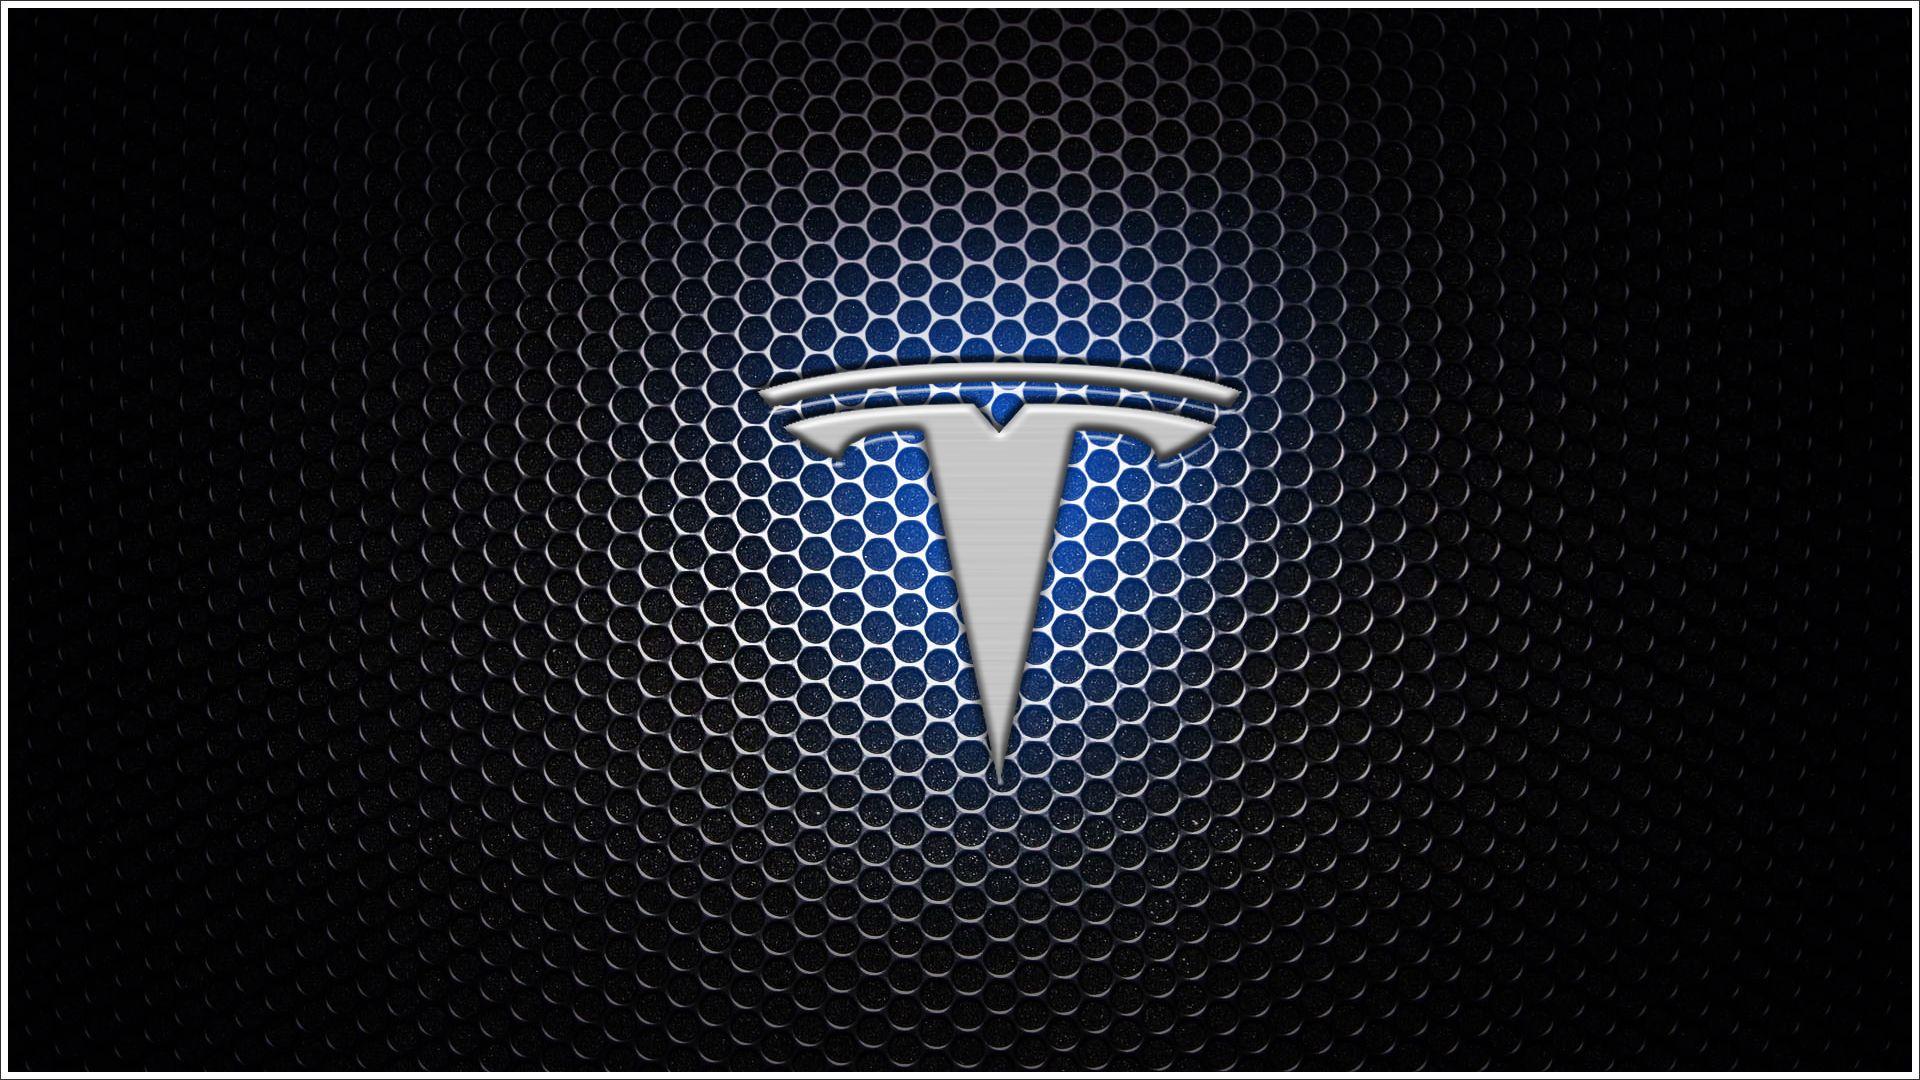 Blue Tesla Logo - Tesla Logo Meaning and History, latest models. World Cars Brands